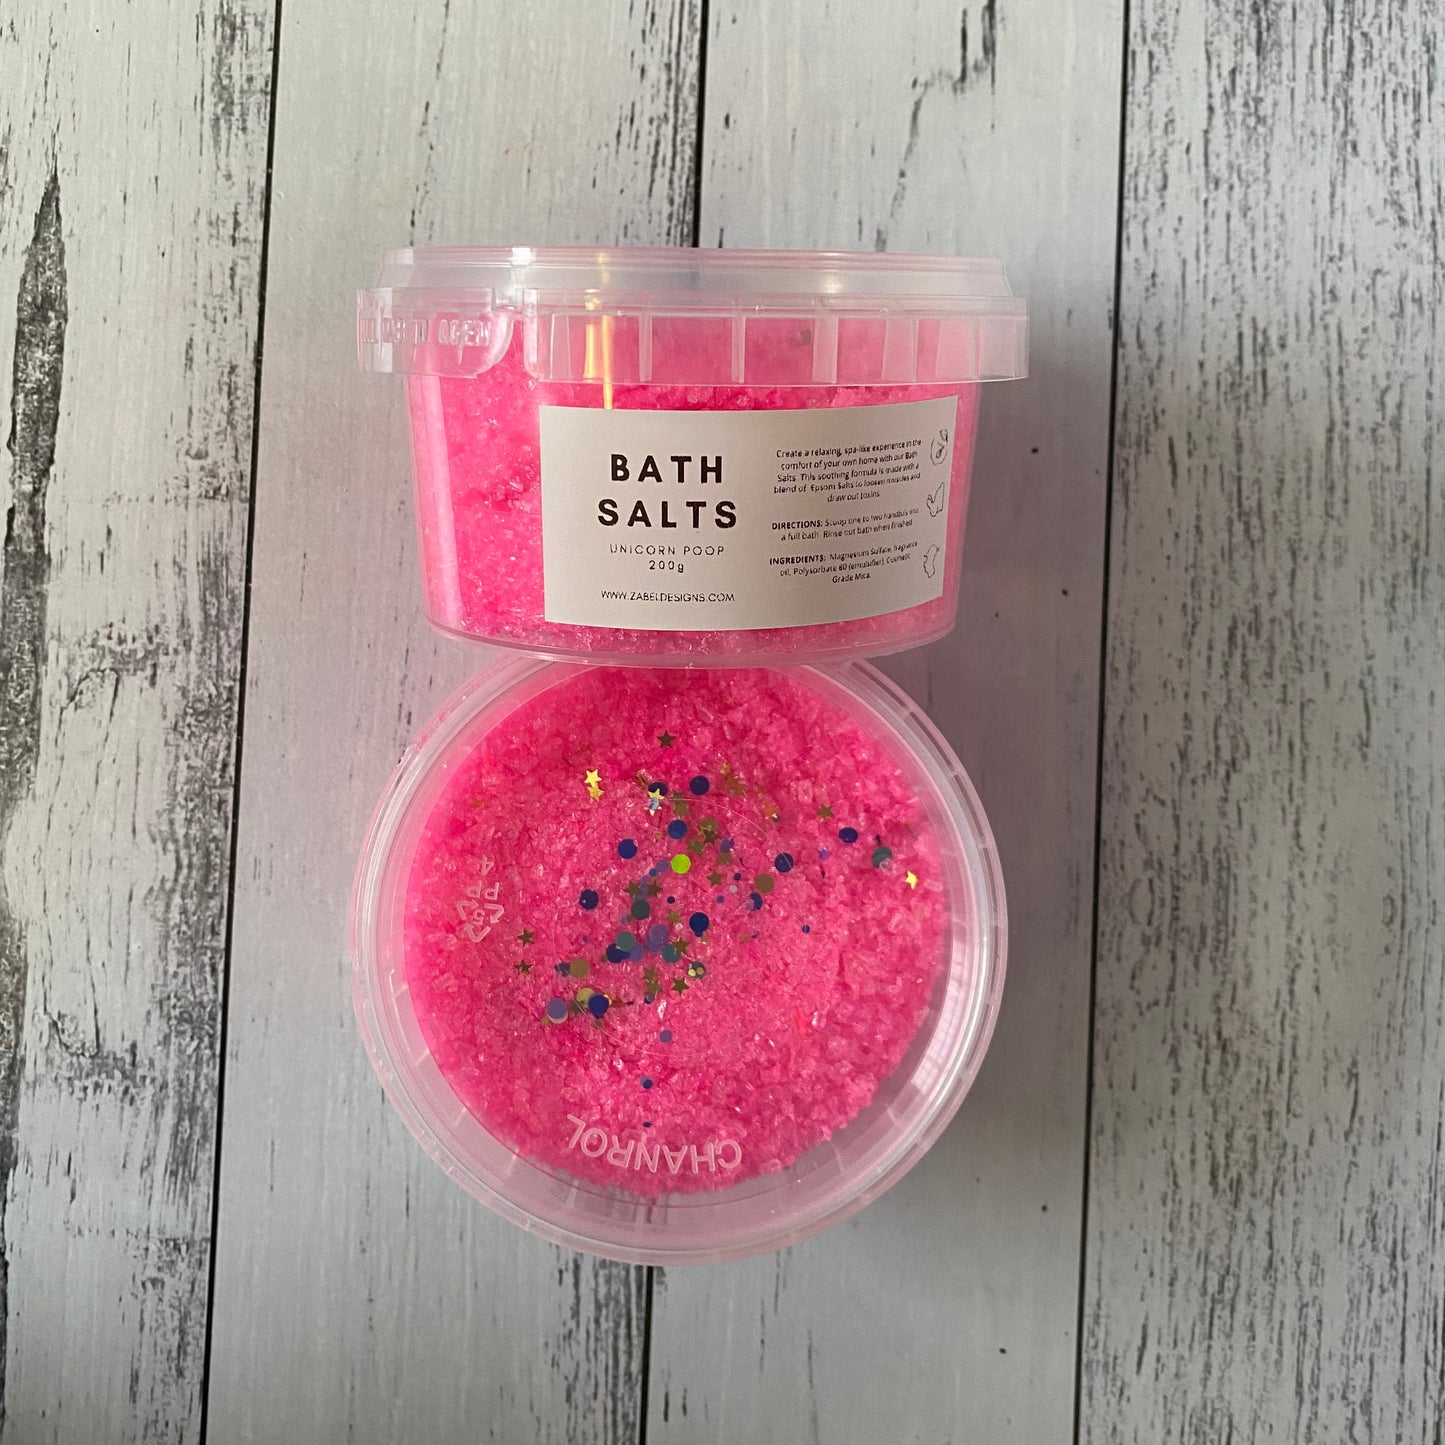 Bath Salts - Unicorn Poop